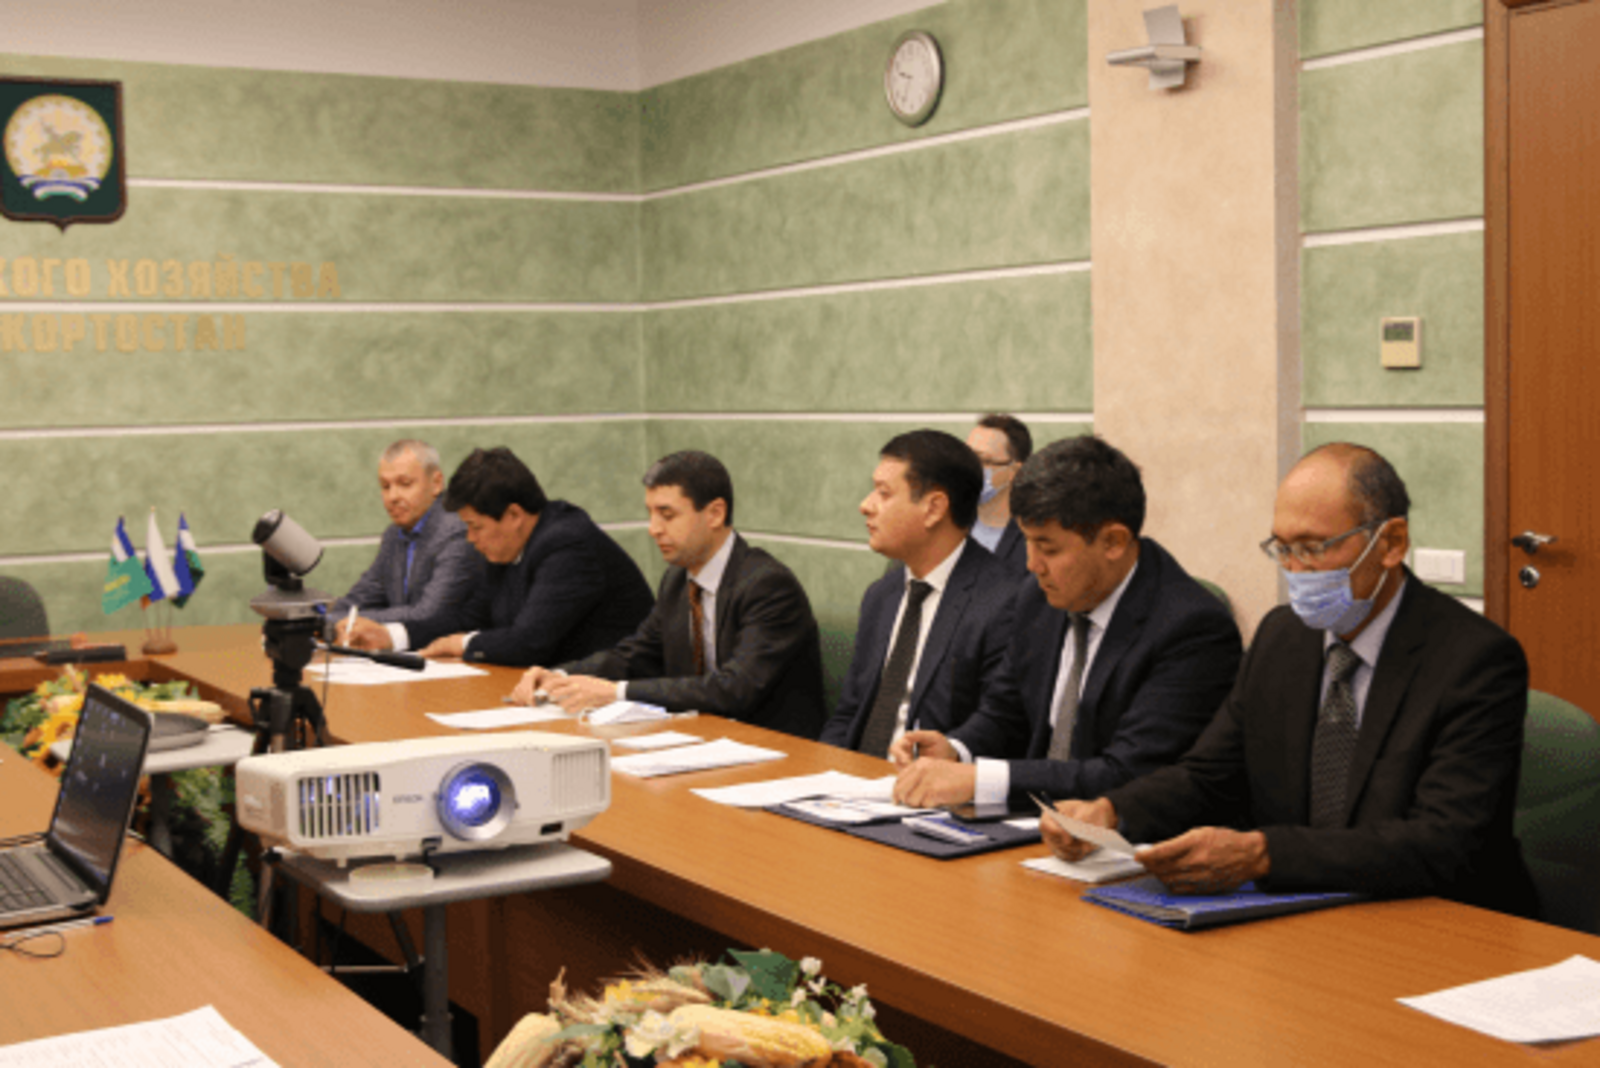 Үзбәкстан делегацияһын нимә ҡыҙыҡһындыра?